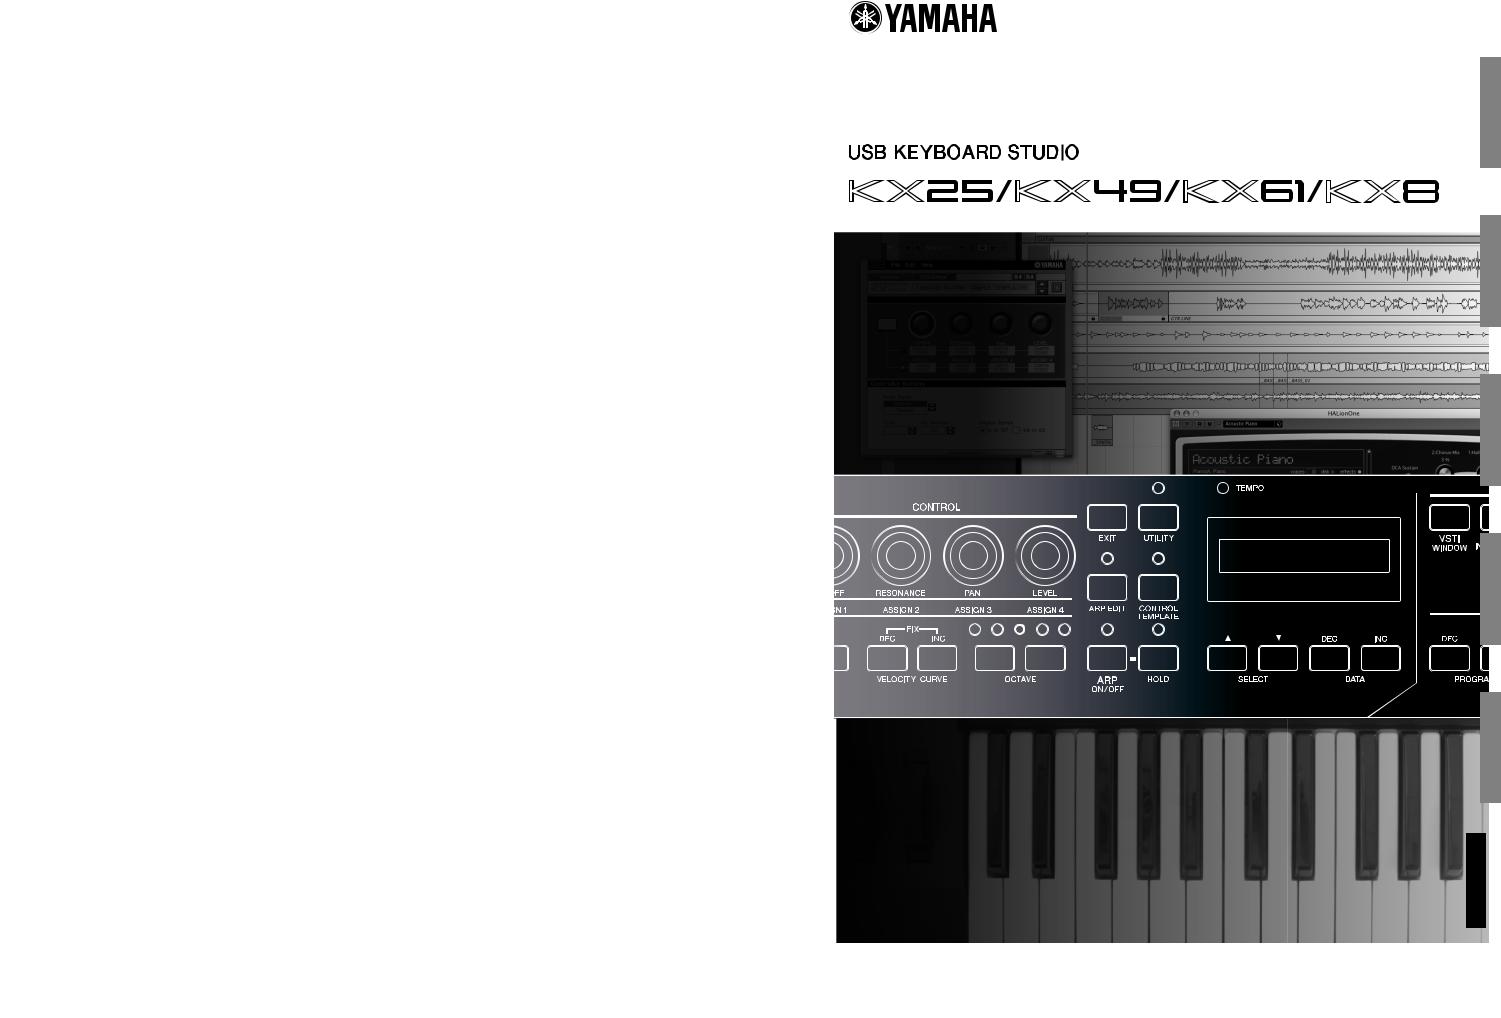 Yamaha KX25, KX61, KX49, KX8 User Manual